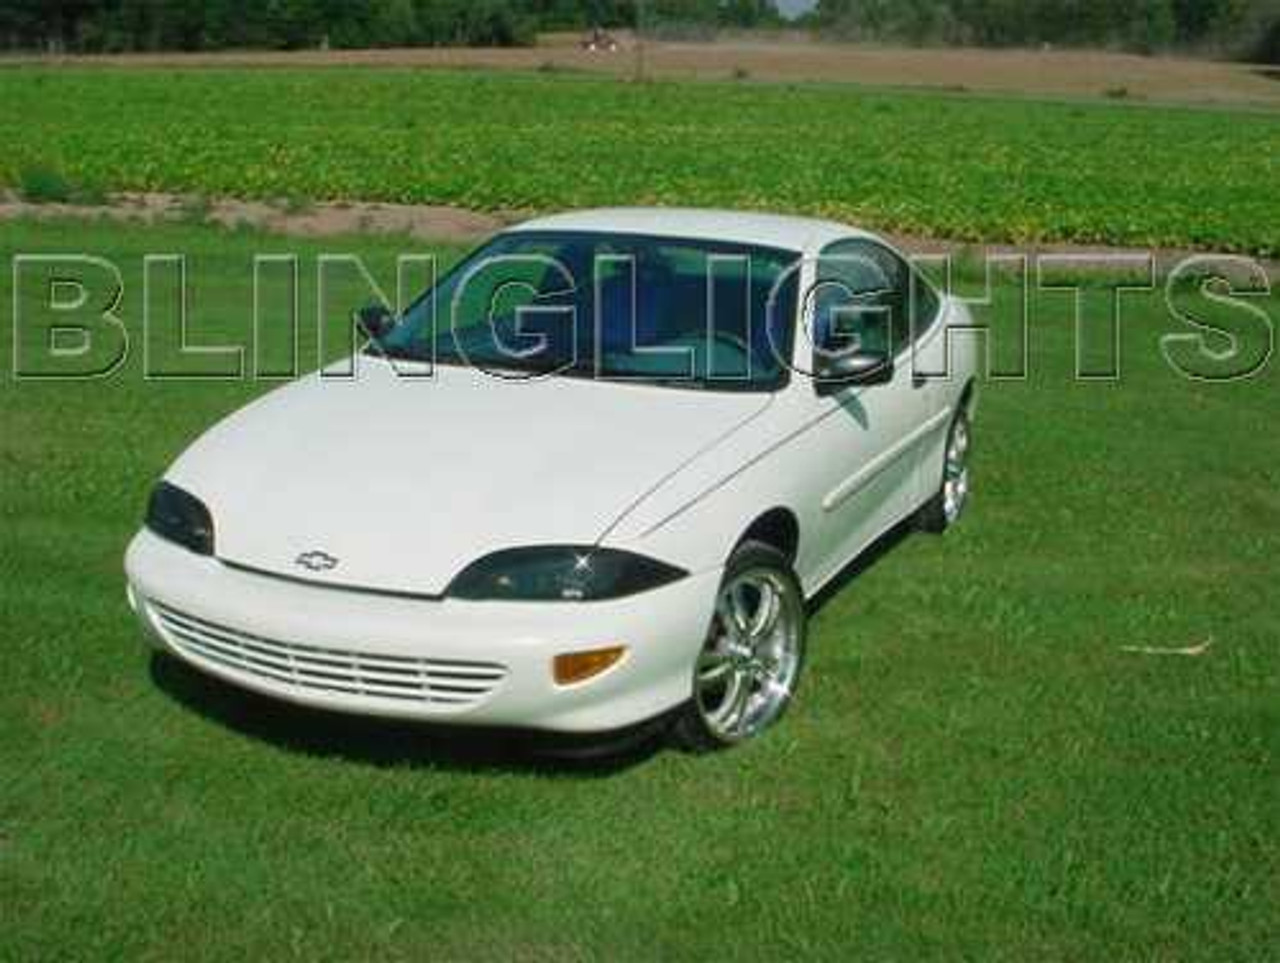 BlingLights Brand Tinted Headlight Overlays for 2000 2001 2002 Chevrolet Cavalier